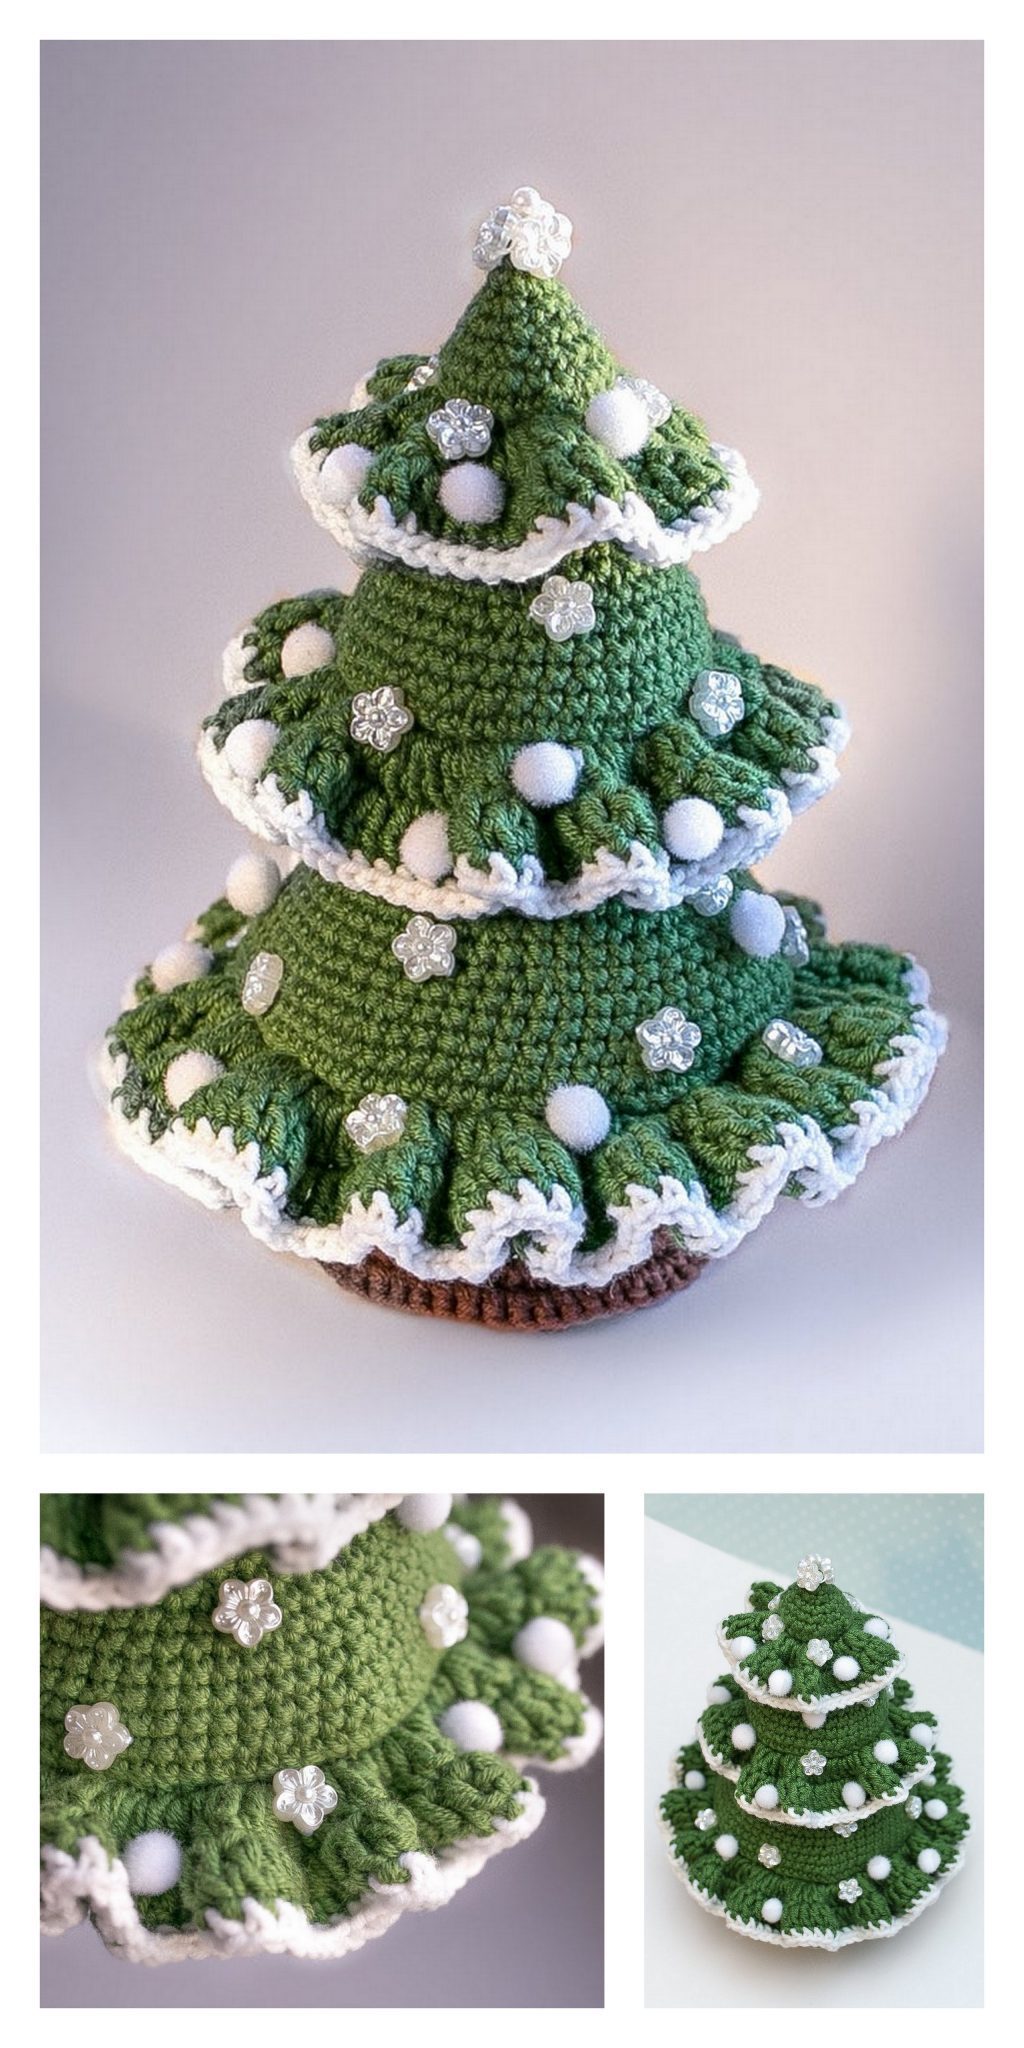 Amigurumi Gingerbread Tree Free Pattern - Free Amigurumi Crochet